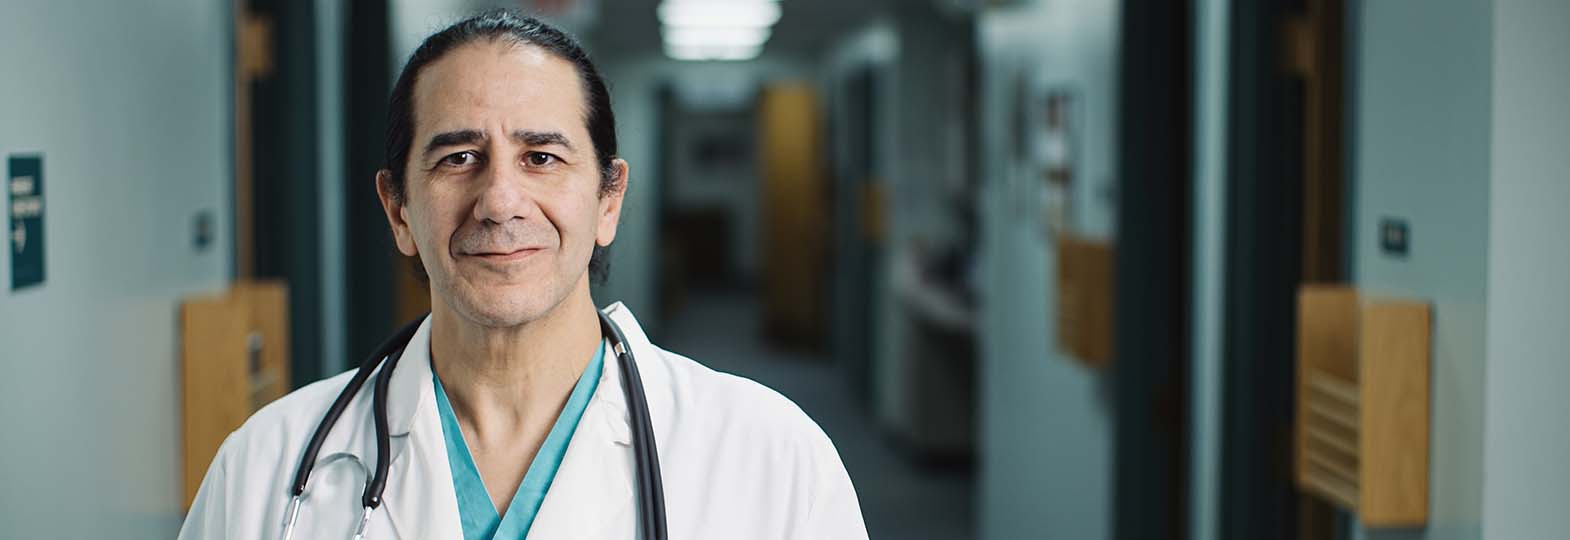 native american doctor